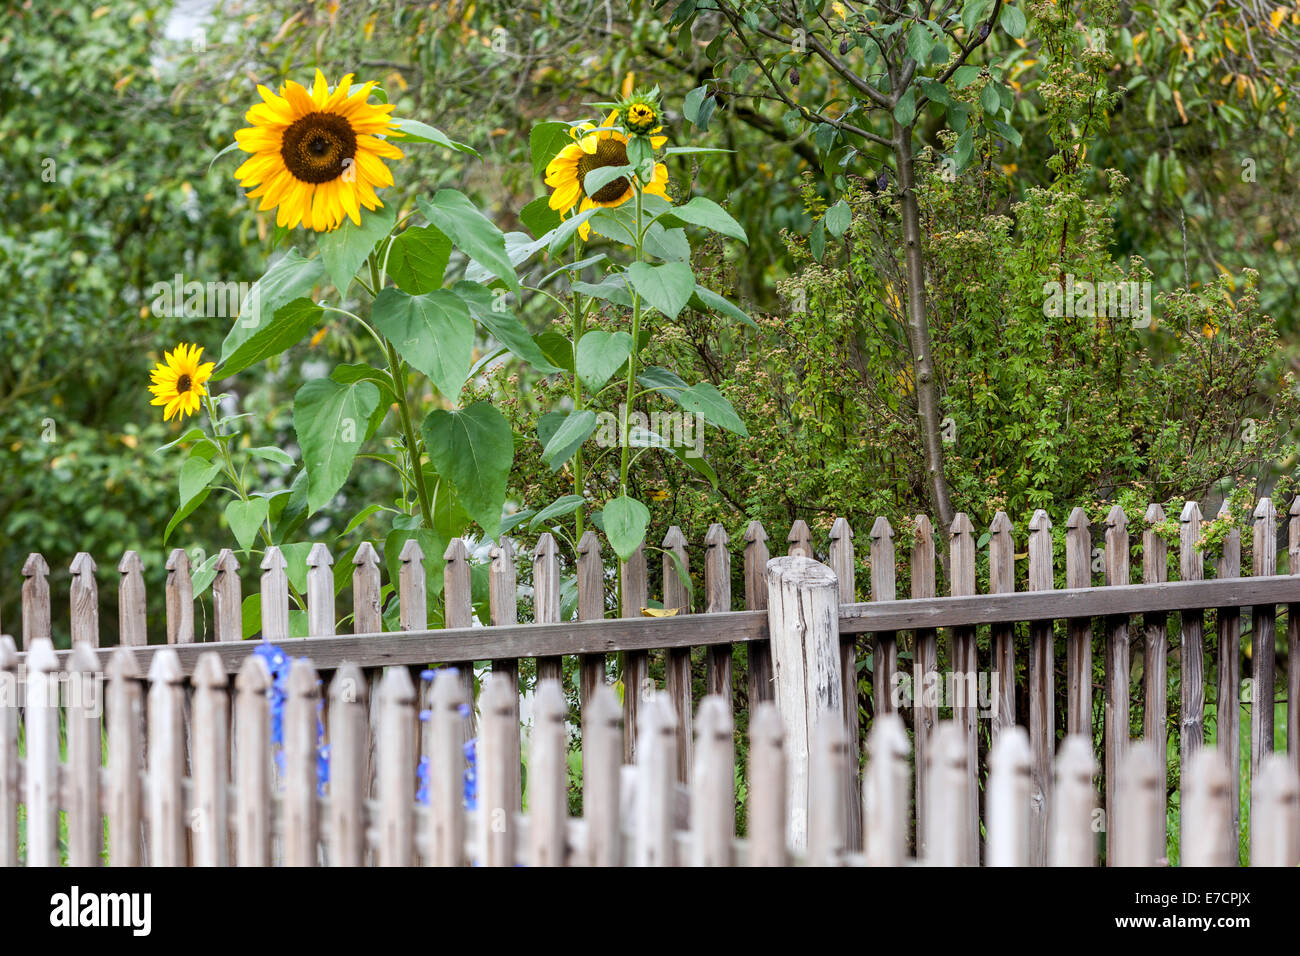 Summer Sunflowers by a rural wooden garden fence, Sunflower garden border tall plant Stock Photo